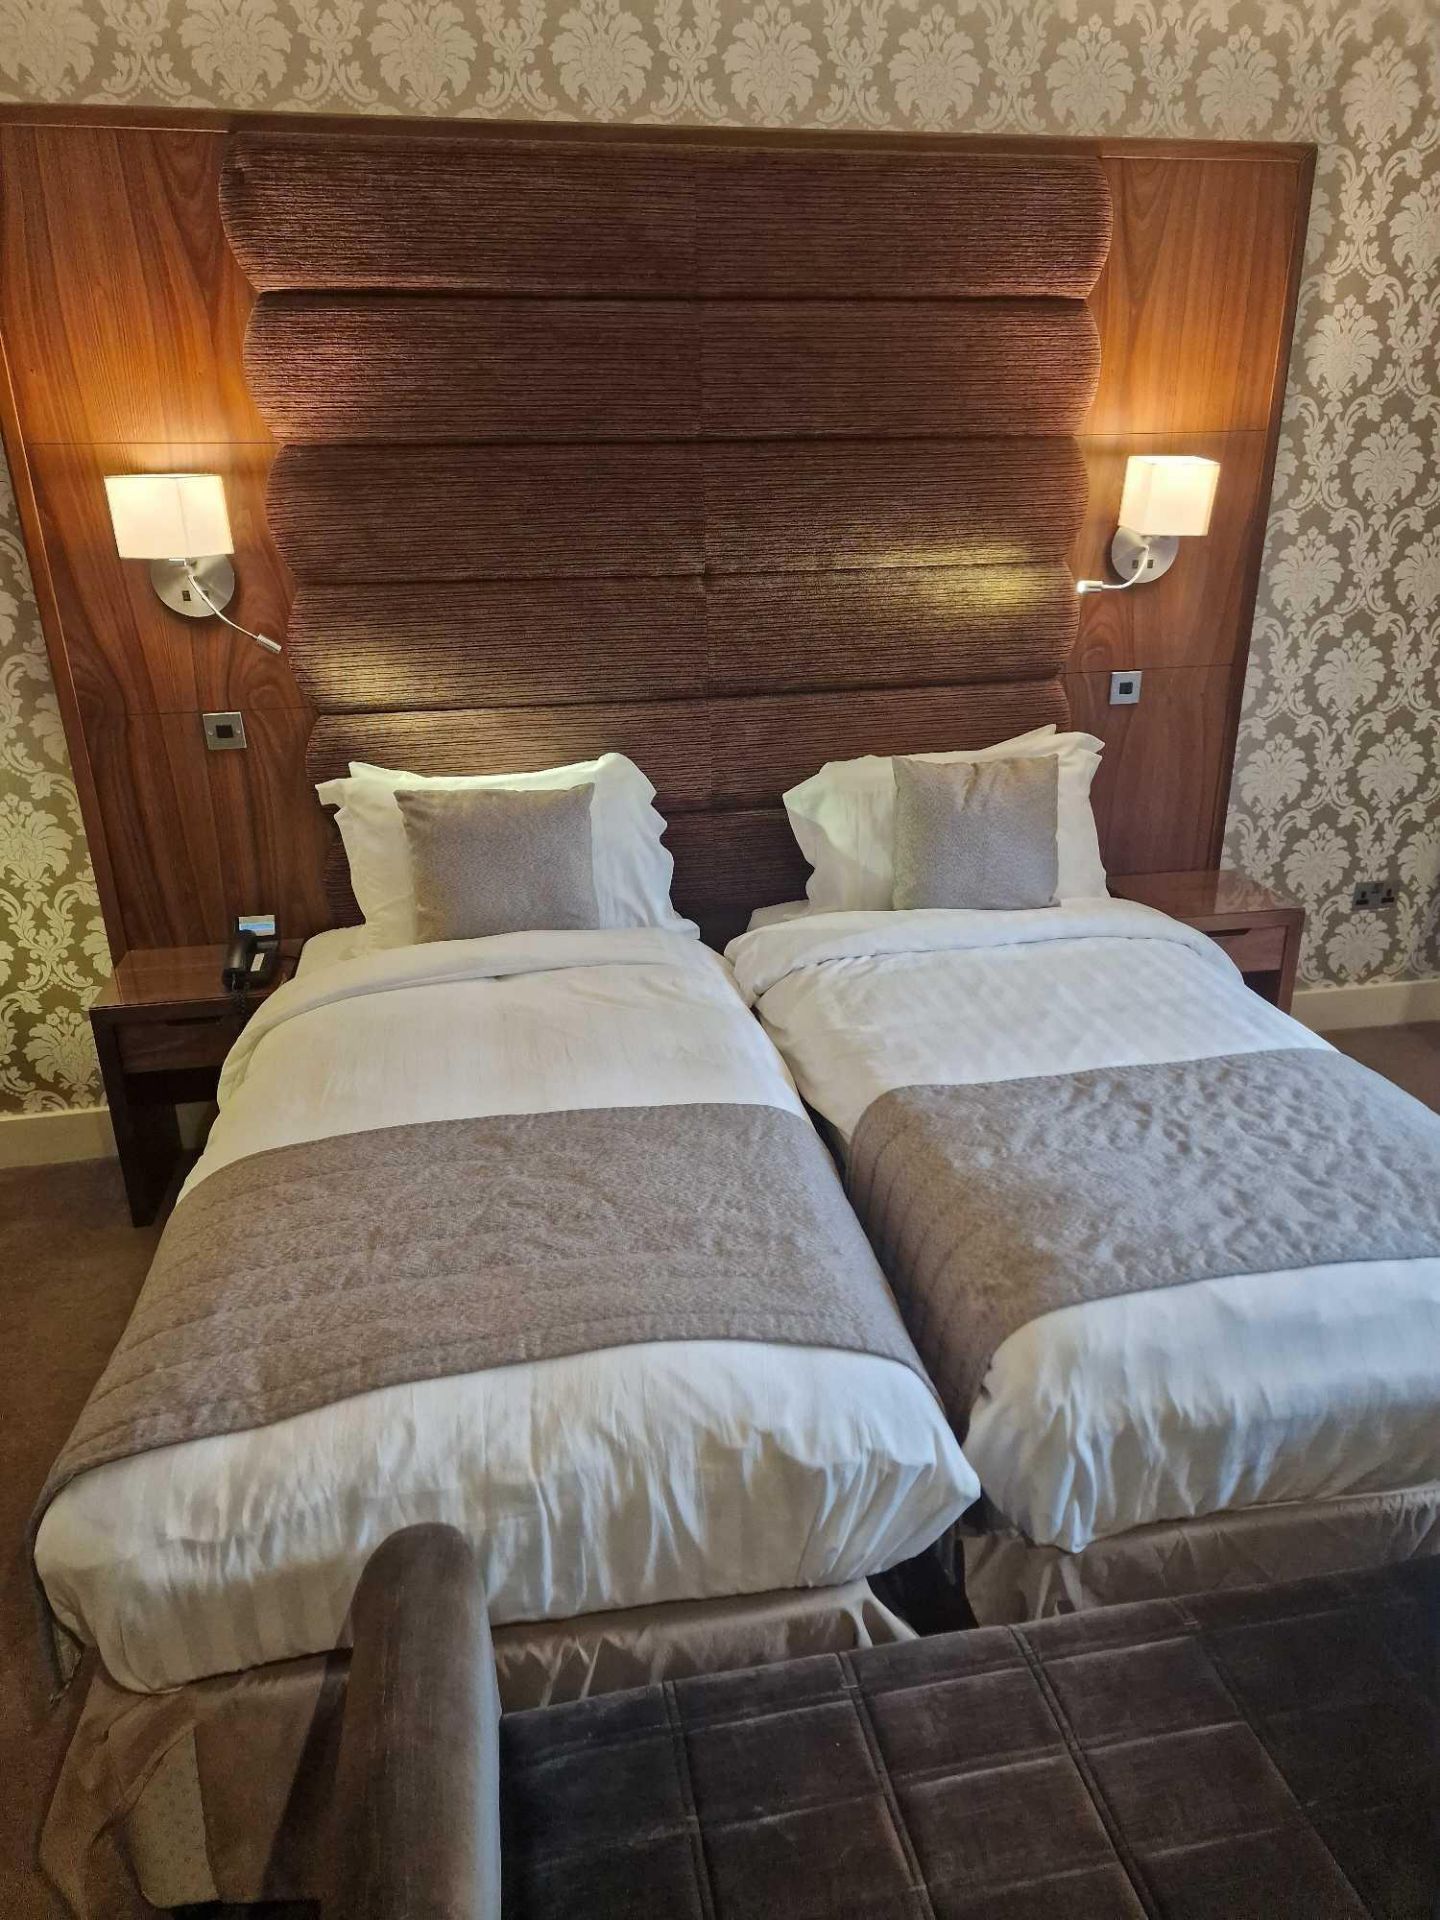 Hypnos Superking 180 x 200cm Zip and Link hotel contract bed comprising of mattress divan base - Bild 2 aus 2